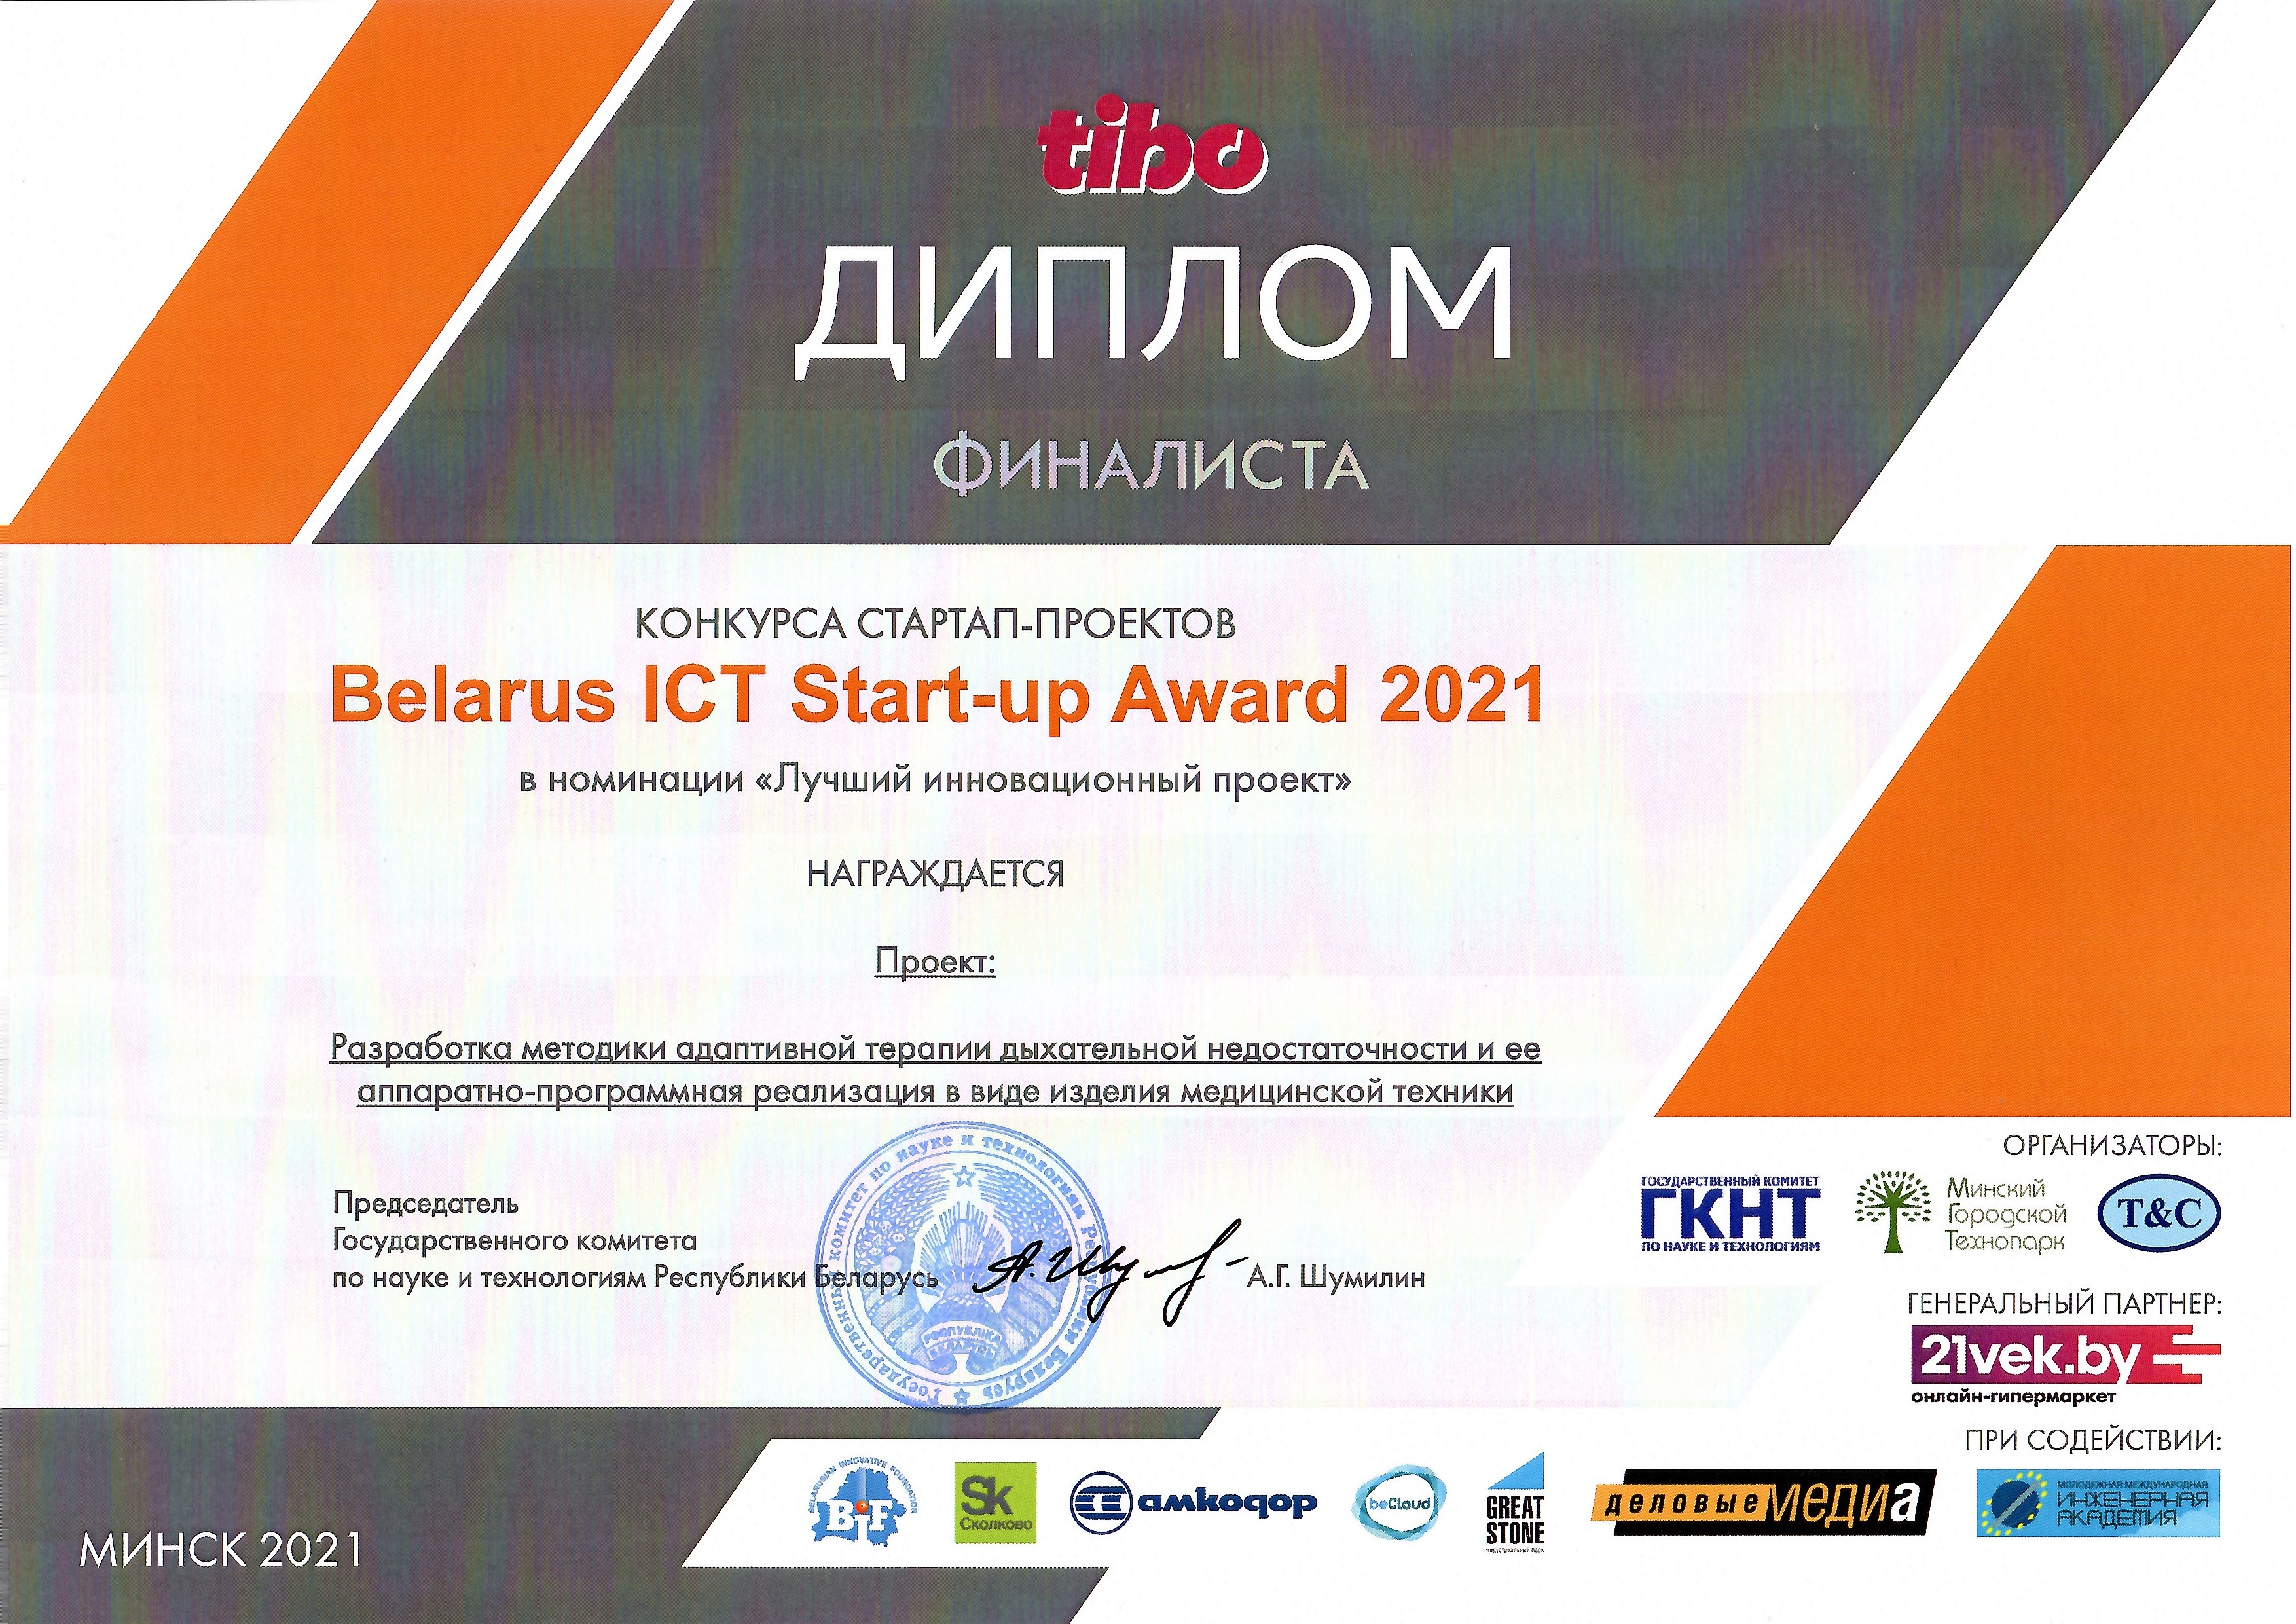 Belarus ICT Start-up Award 2021